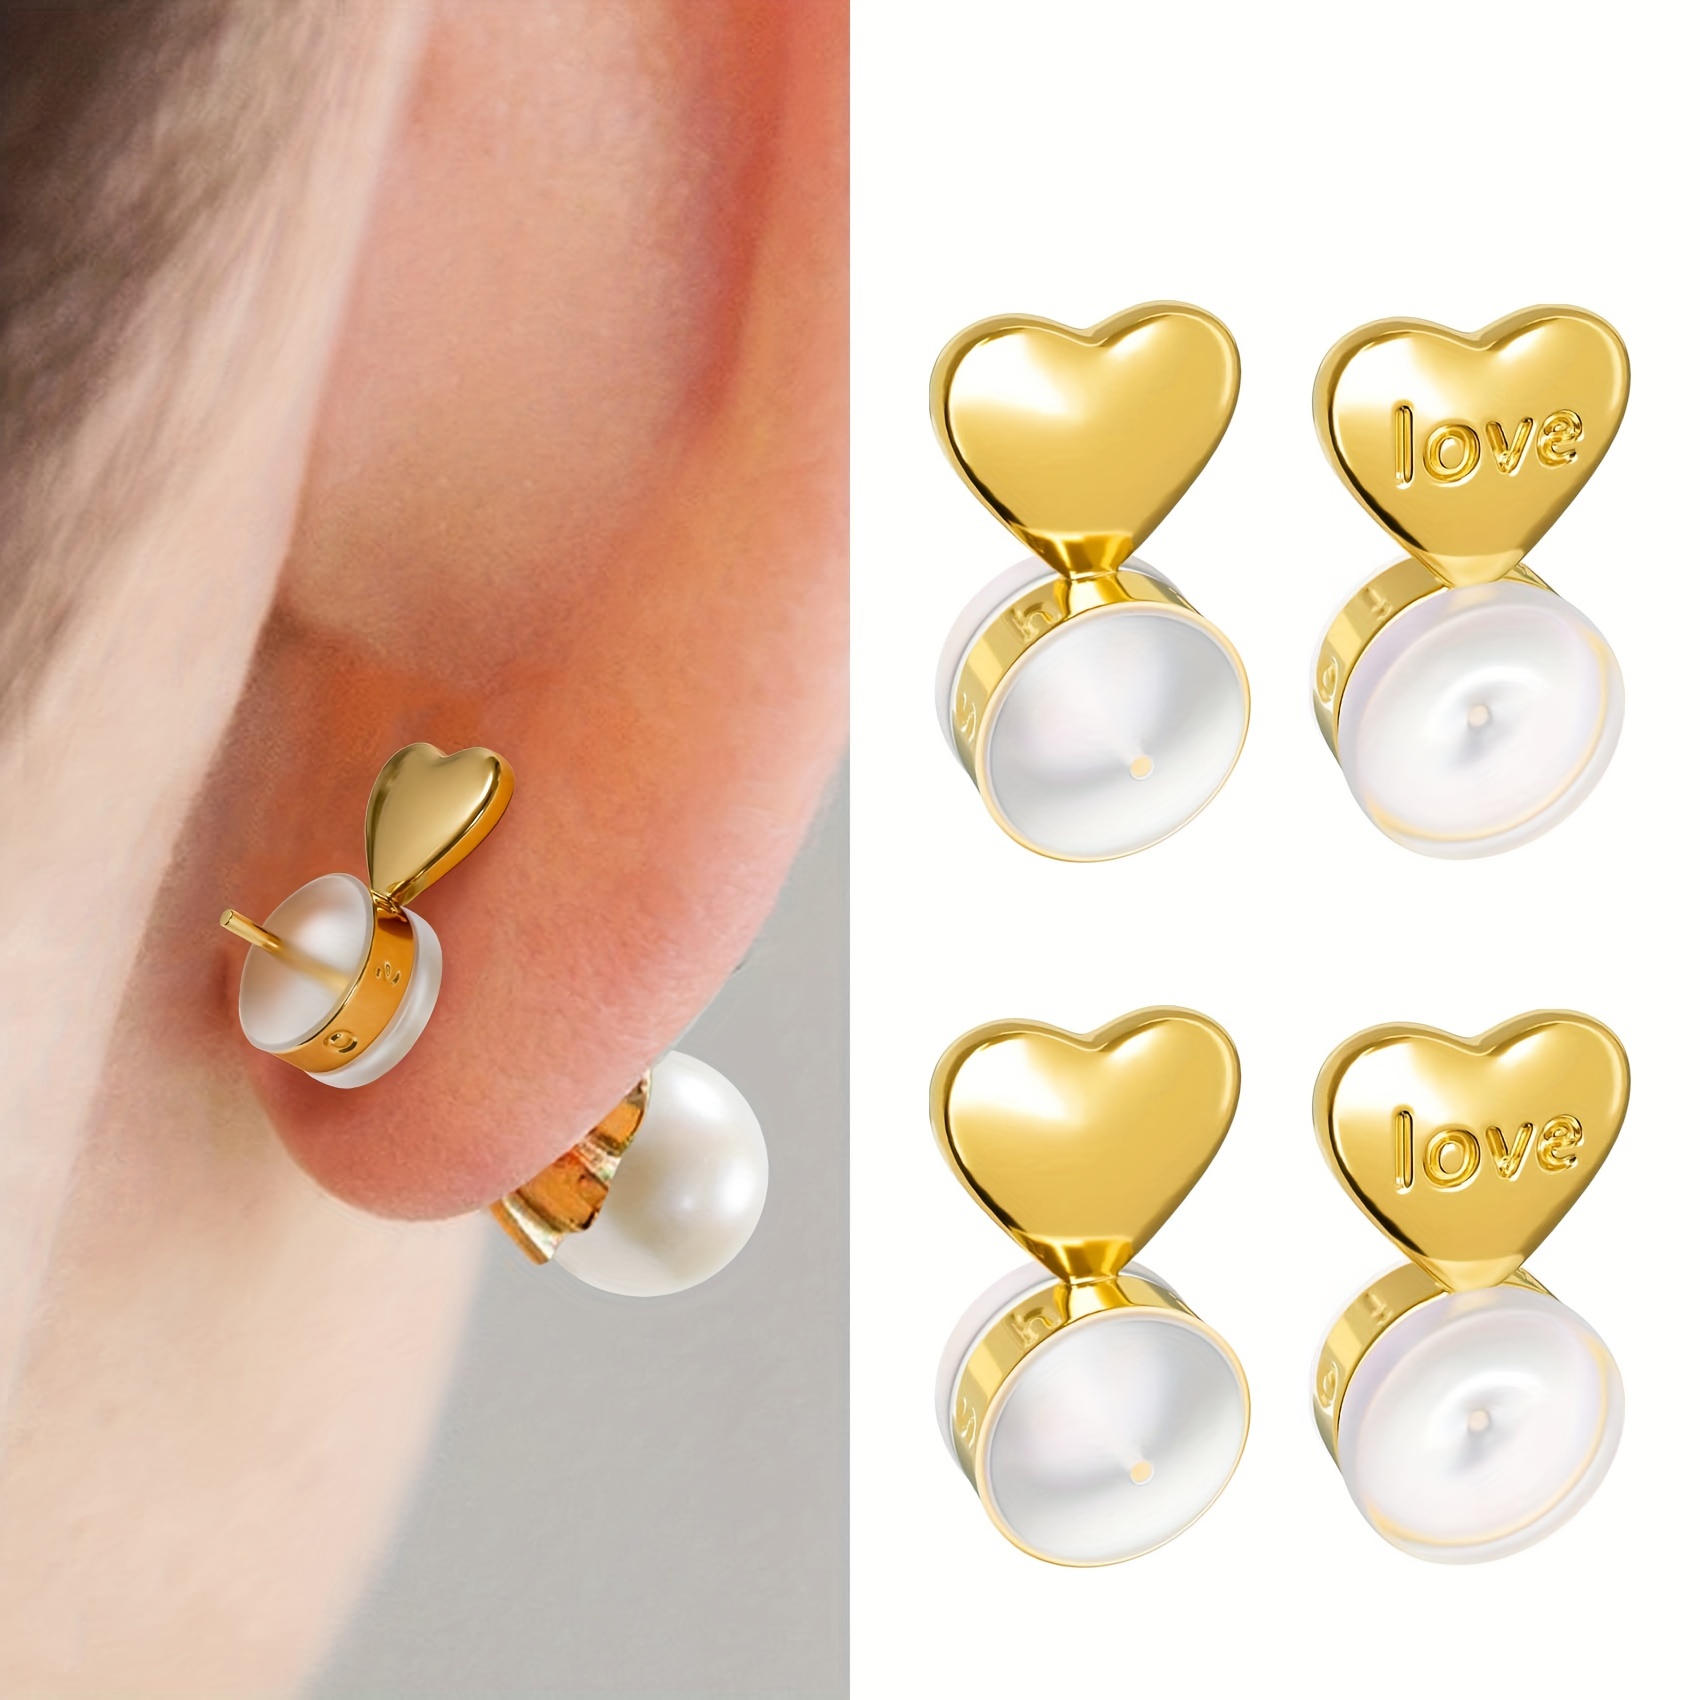 Earring Backs For Droopy Ears Silicone Locking Earring Backs For Studs  Heavy Ear